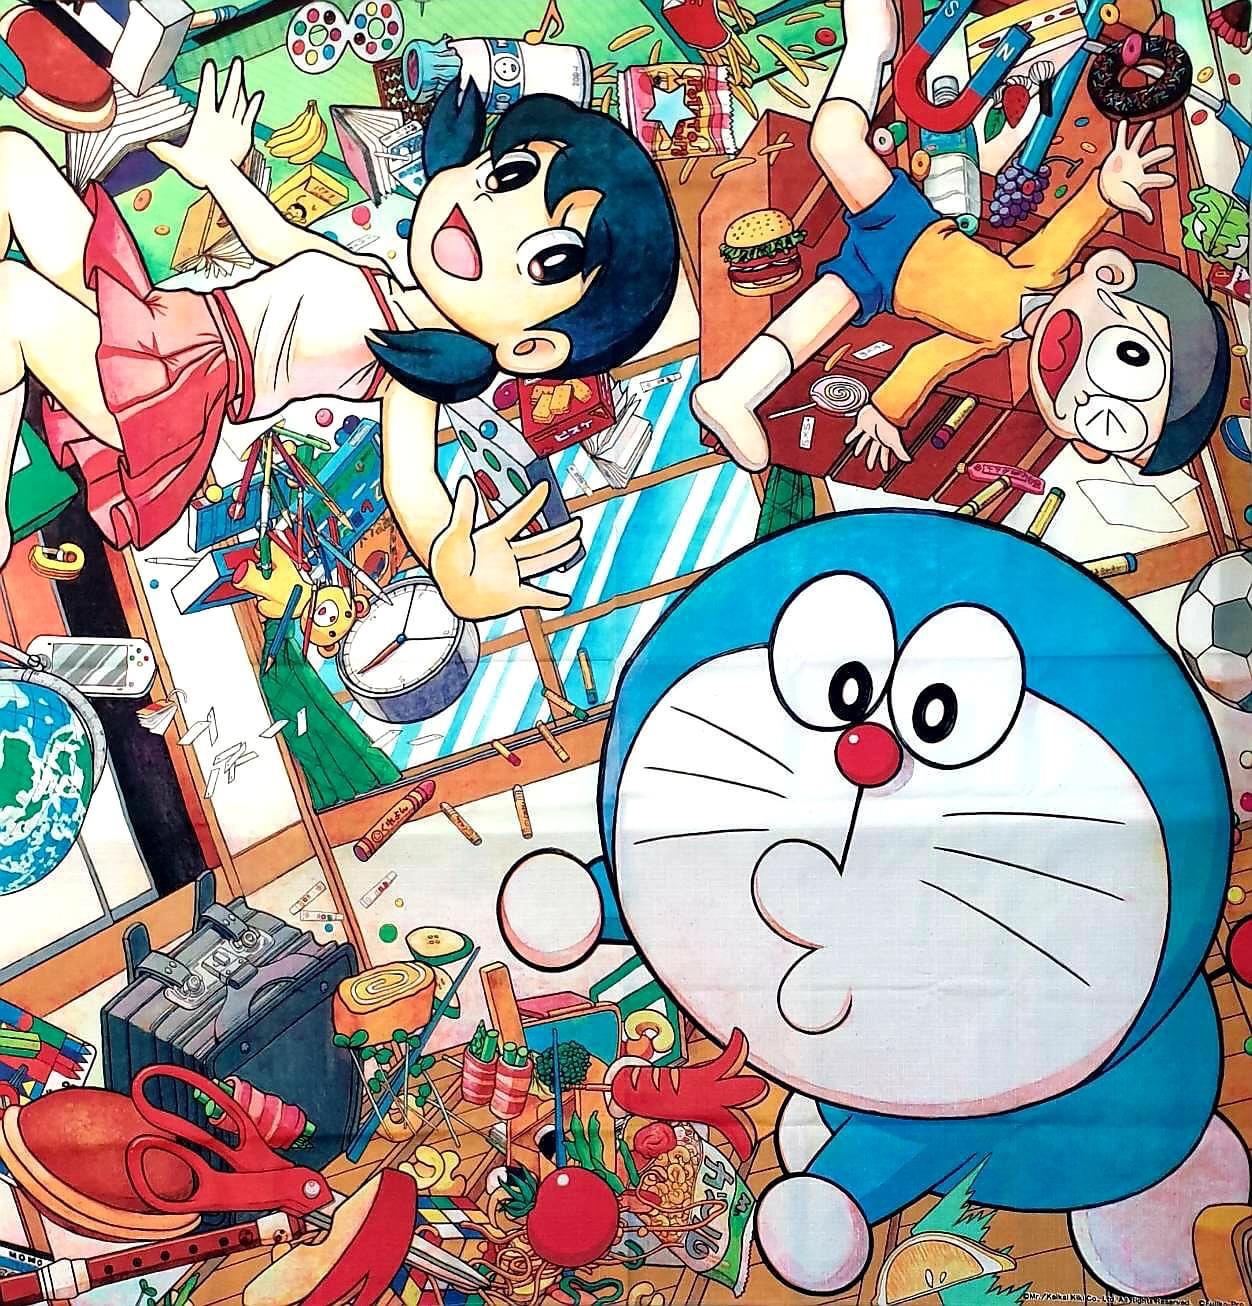 MR. x Doraemon Fabric Print (Tokyo Exclusive), 2017